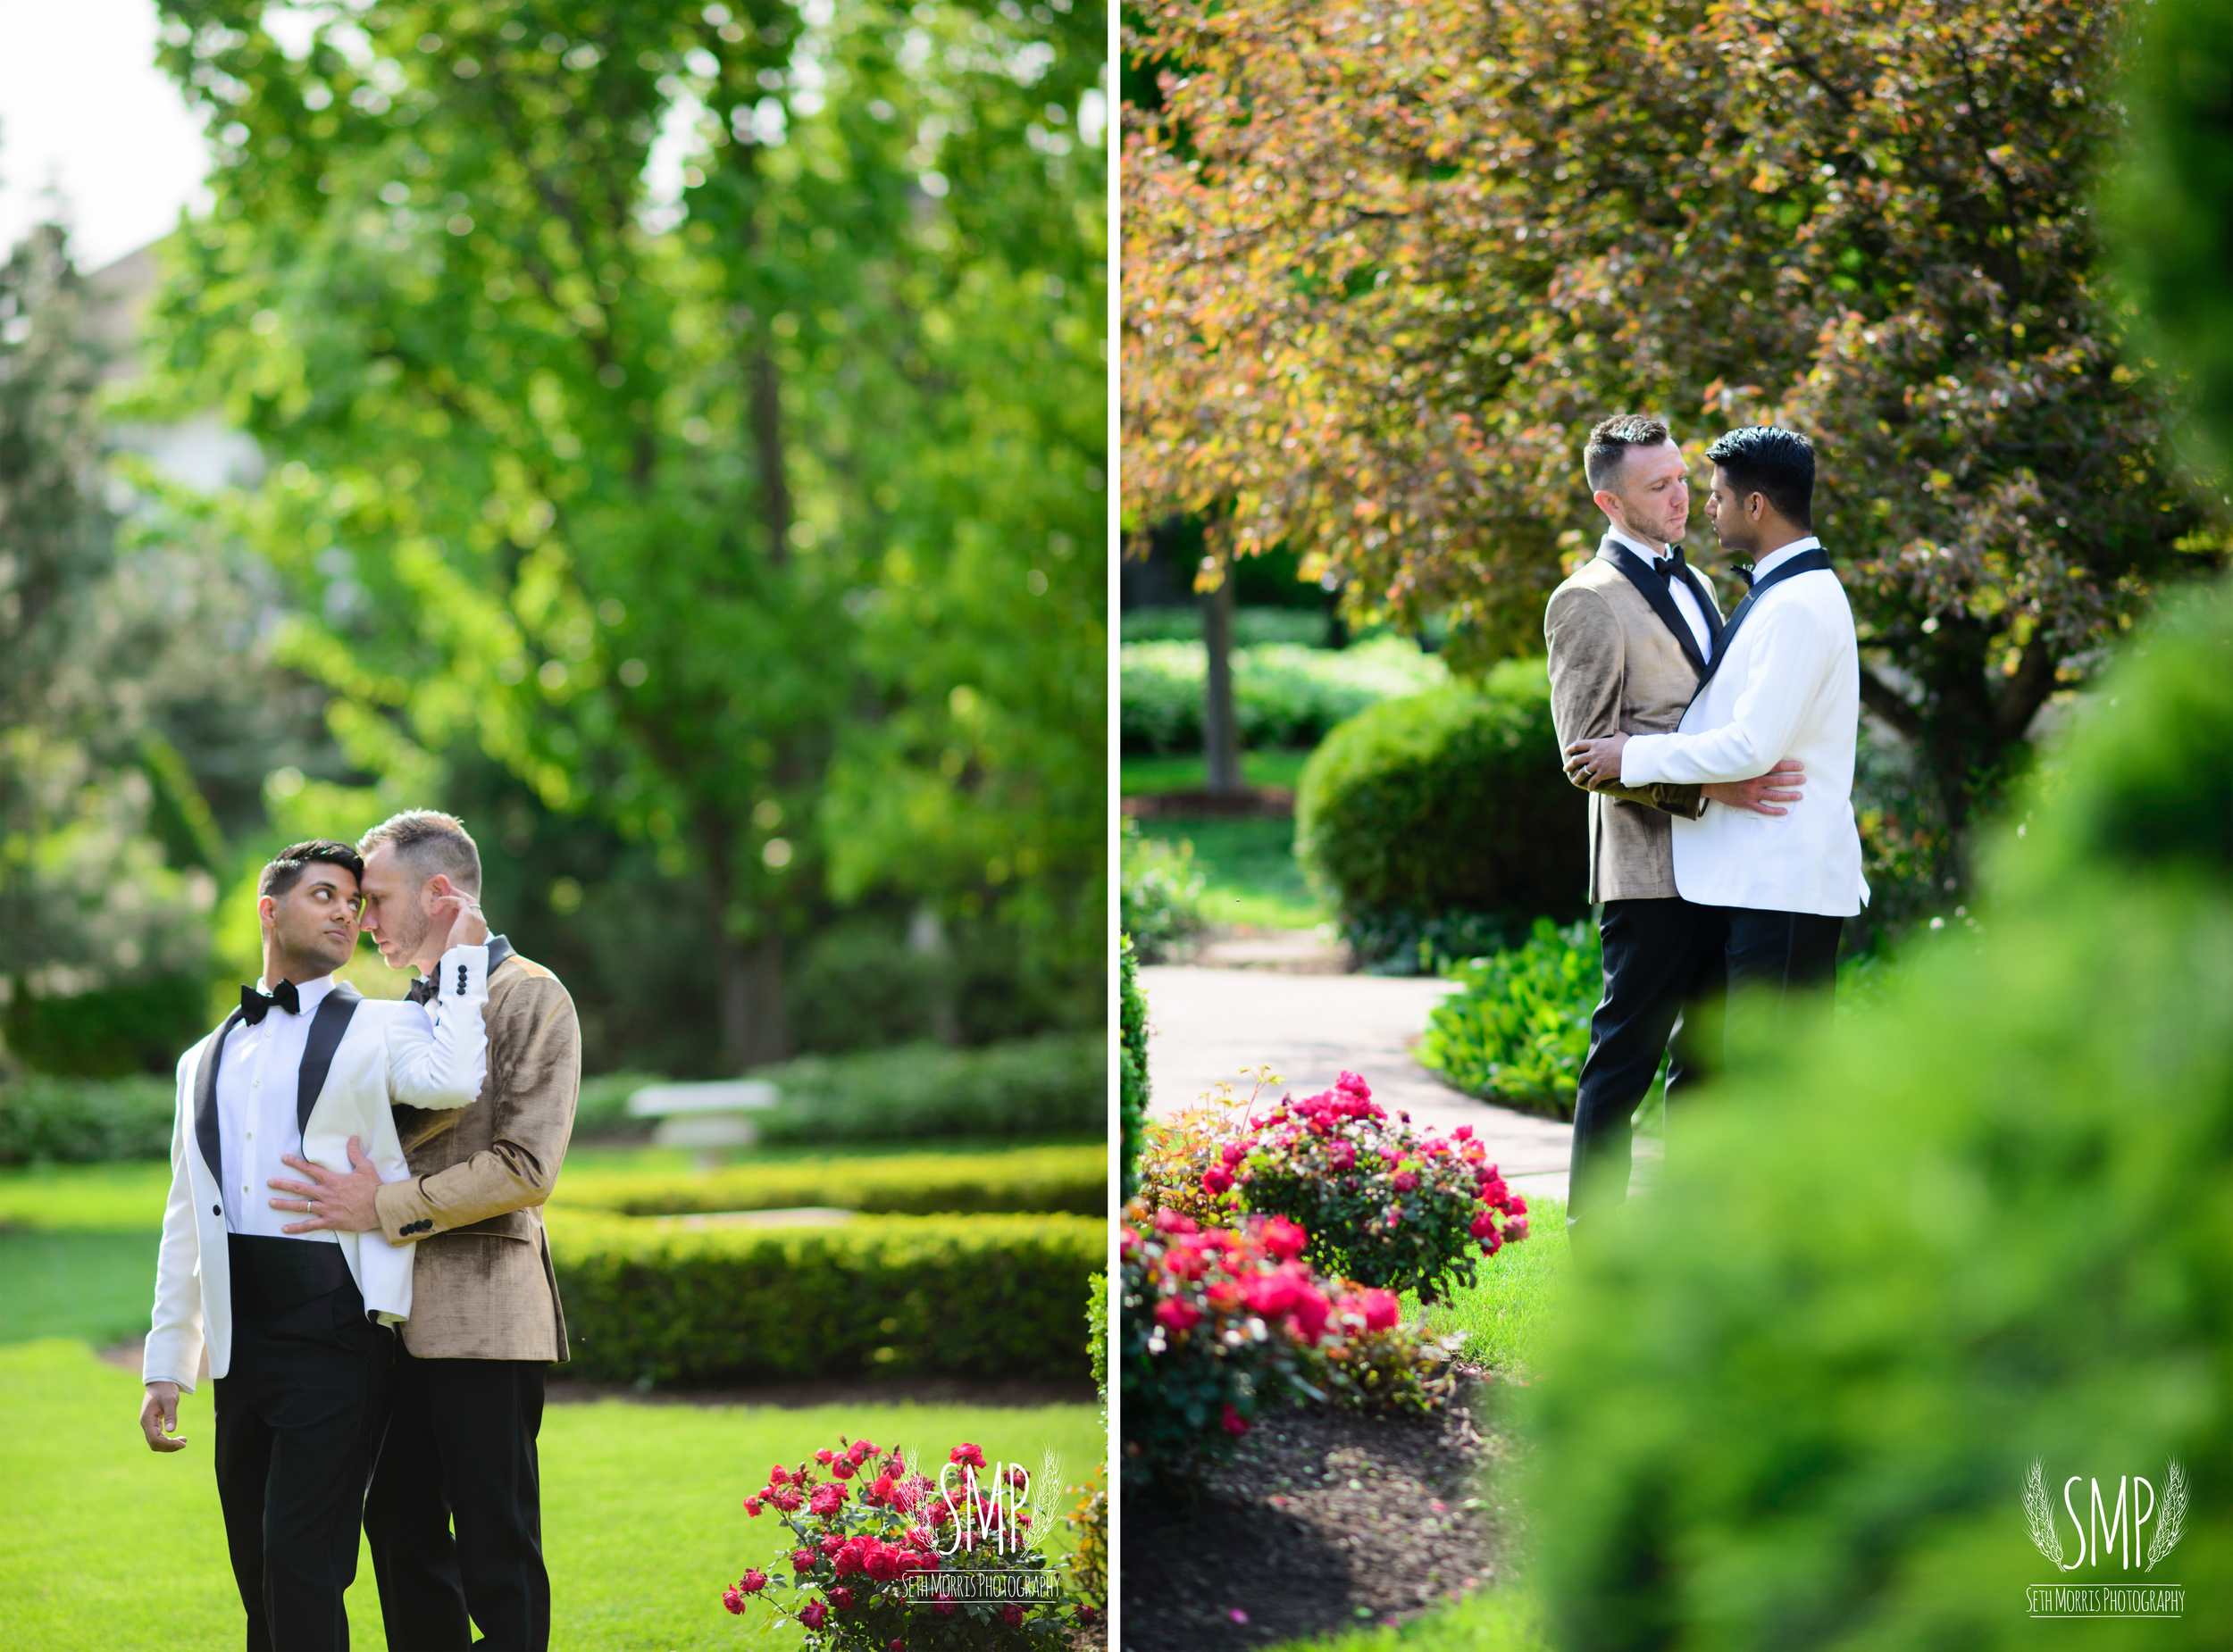 same-sex-wedding-photographer-chicago-illinois-42.jpg